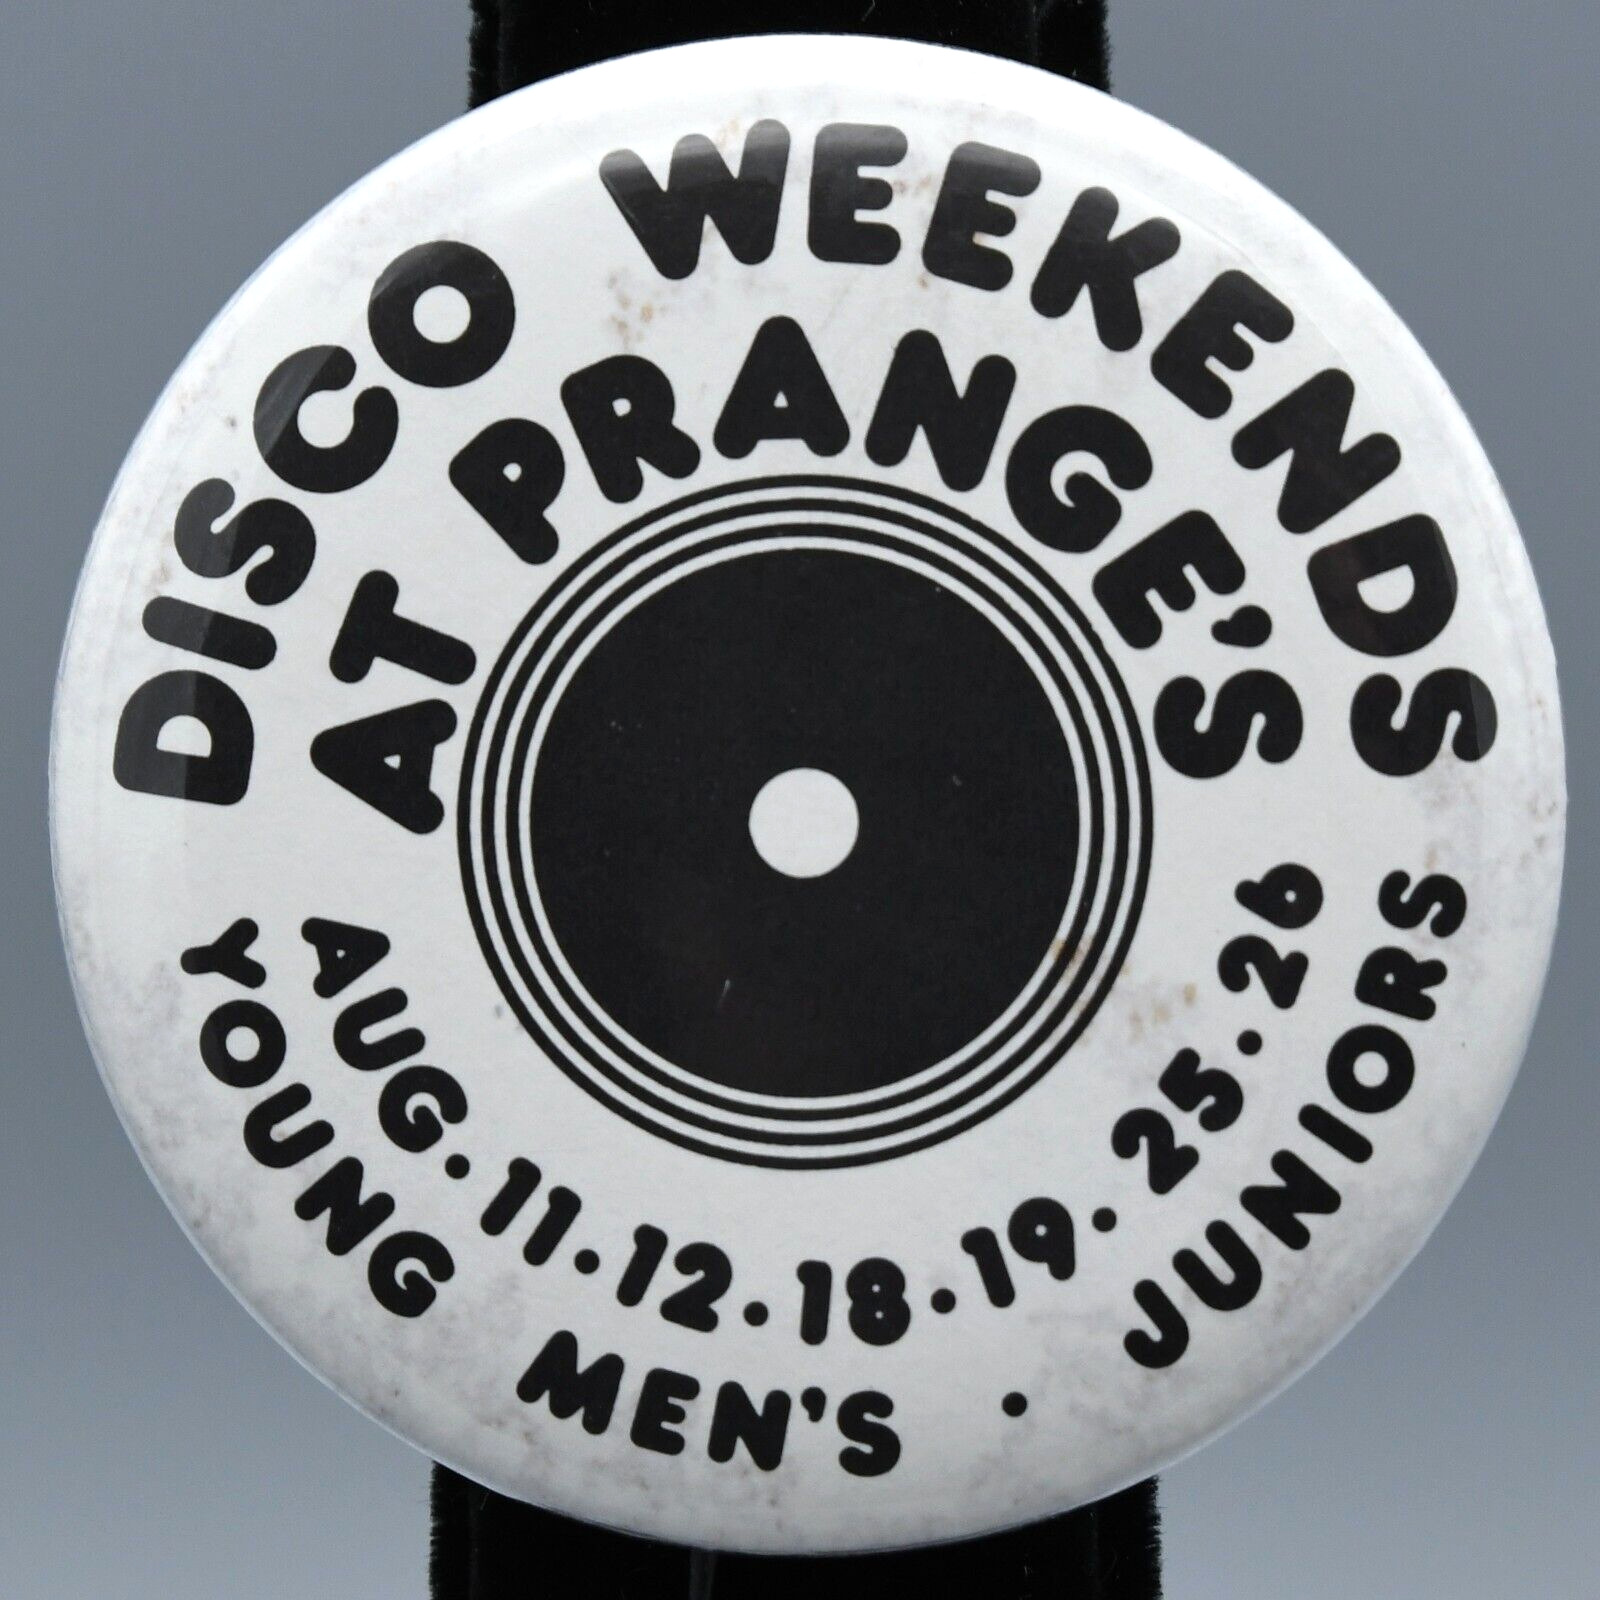 Disco Weekends at Pranges Button Pinback Vintage 1970s